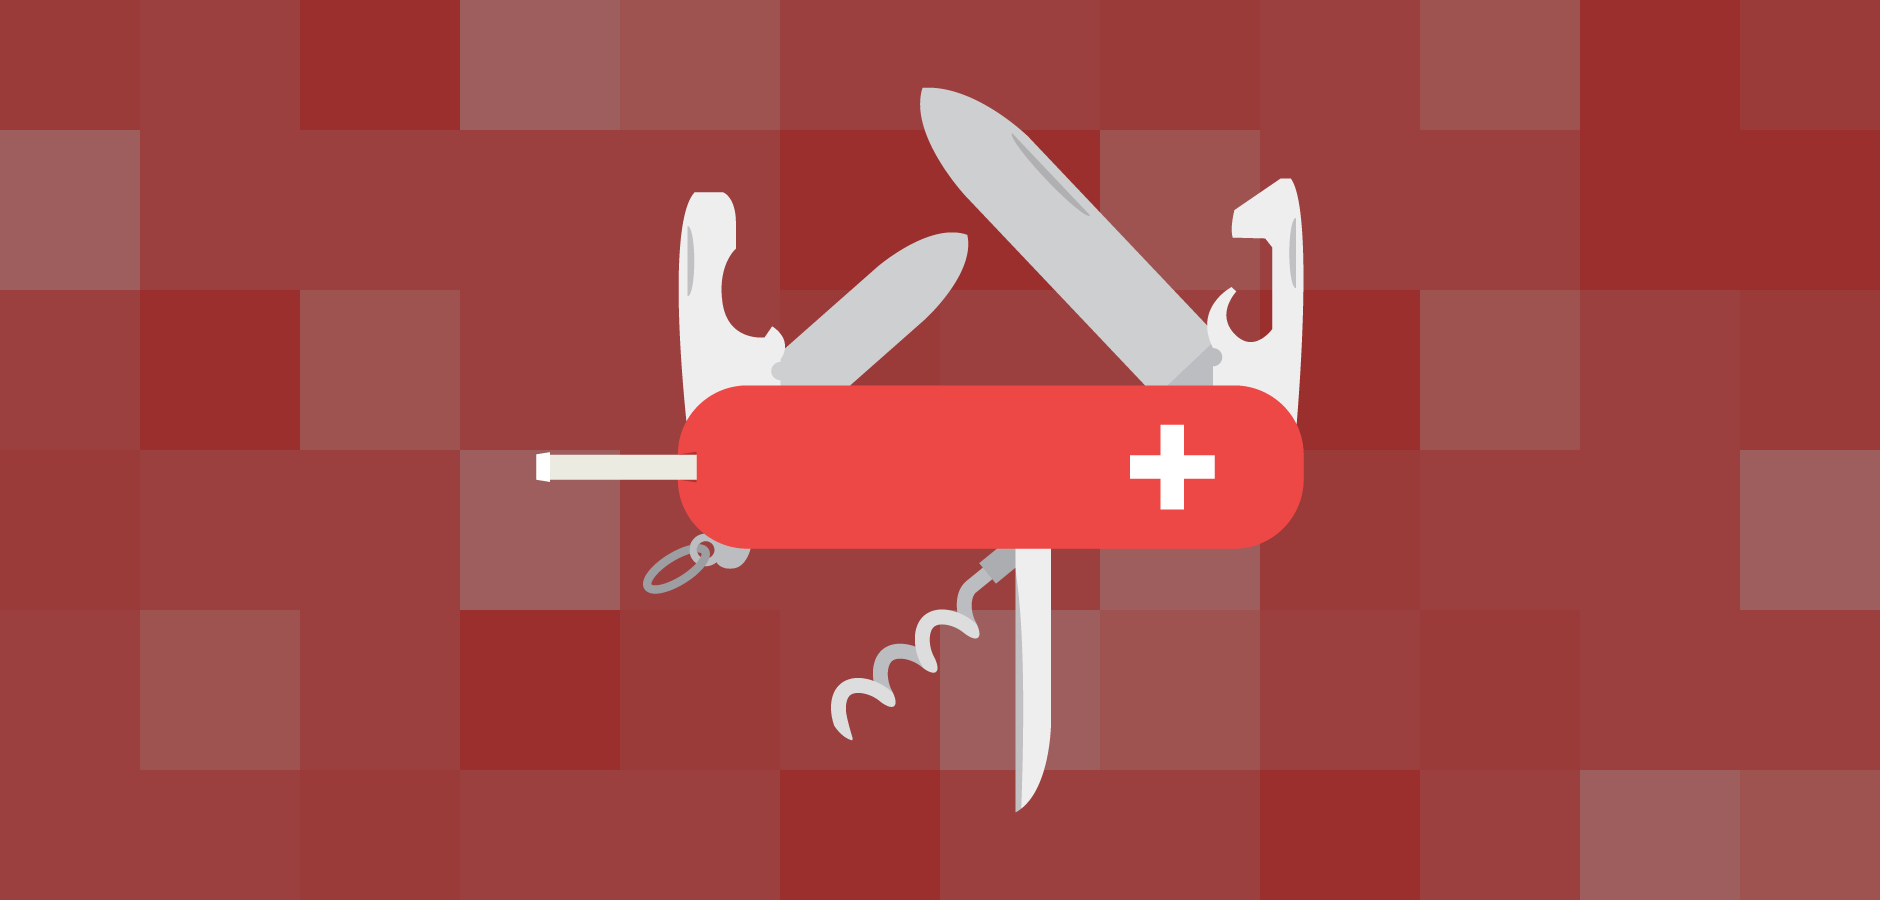 Dot Pixel - Illustration - Swiss Army Knife